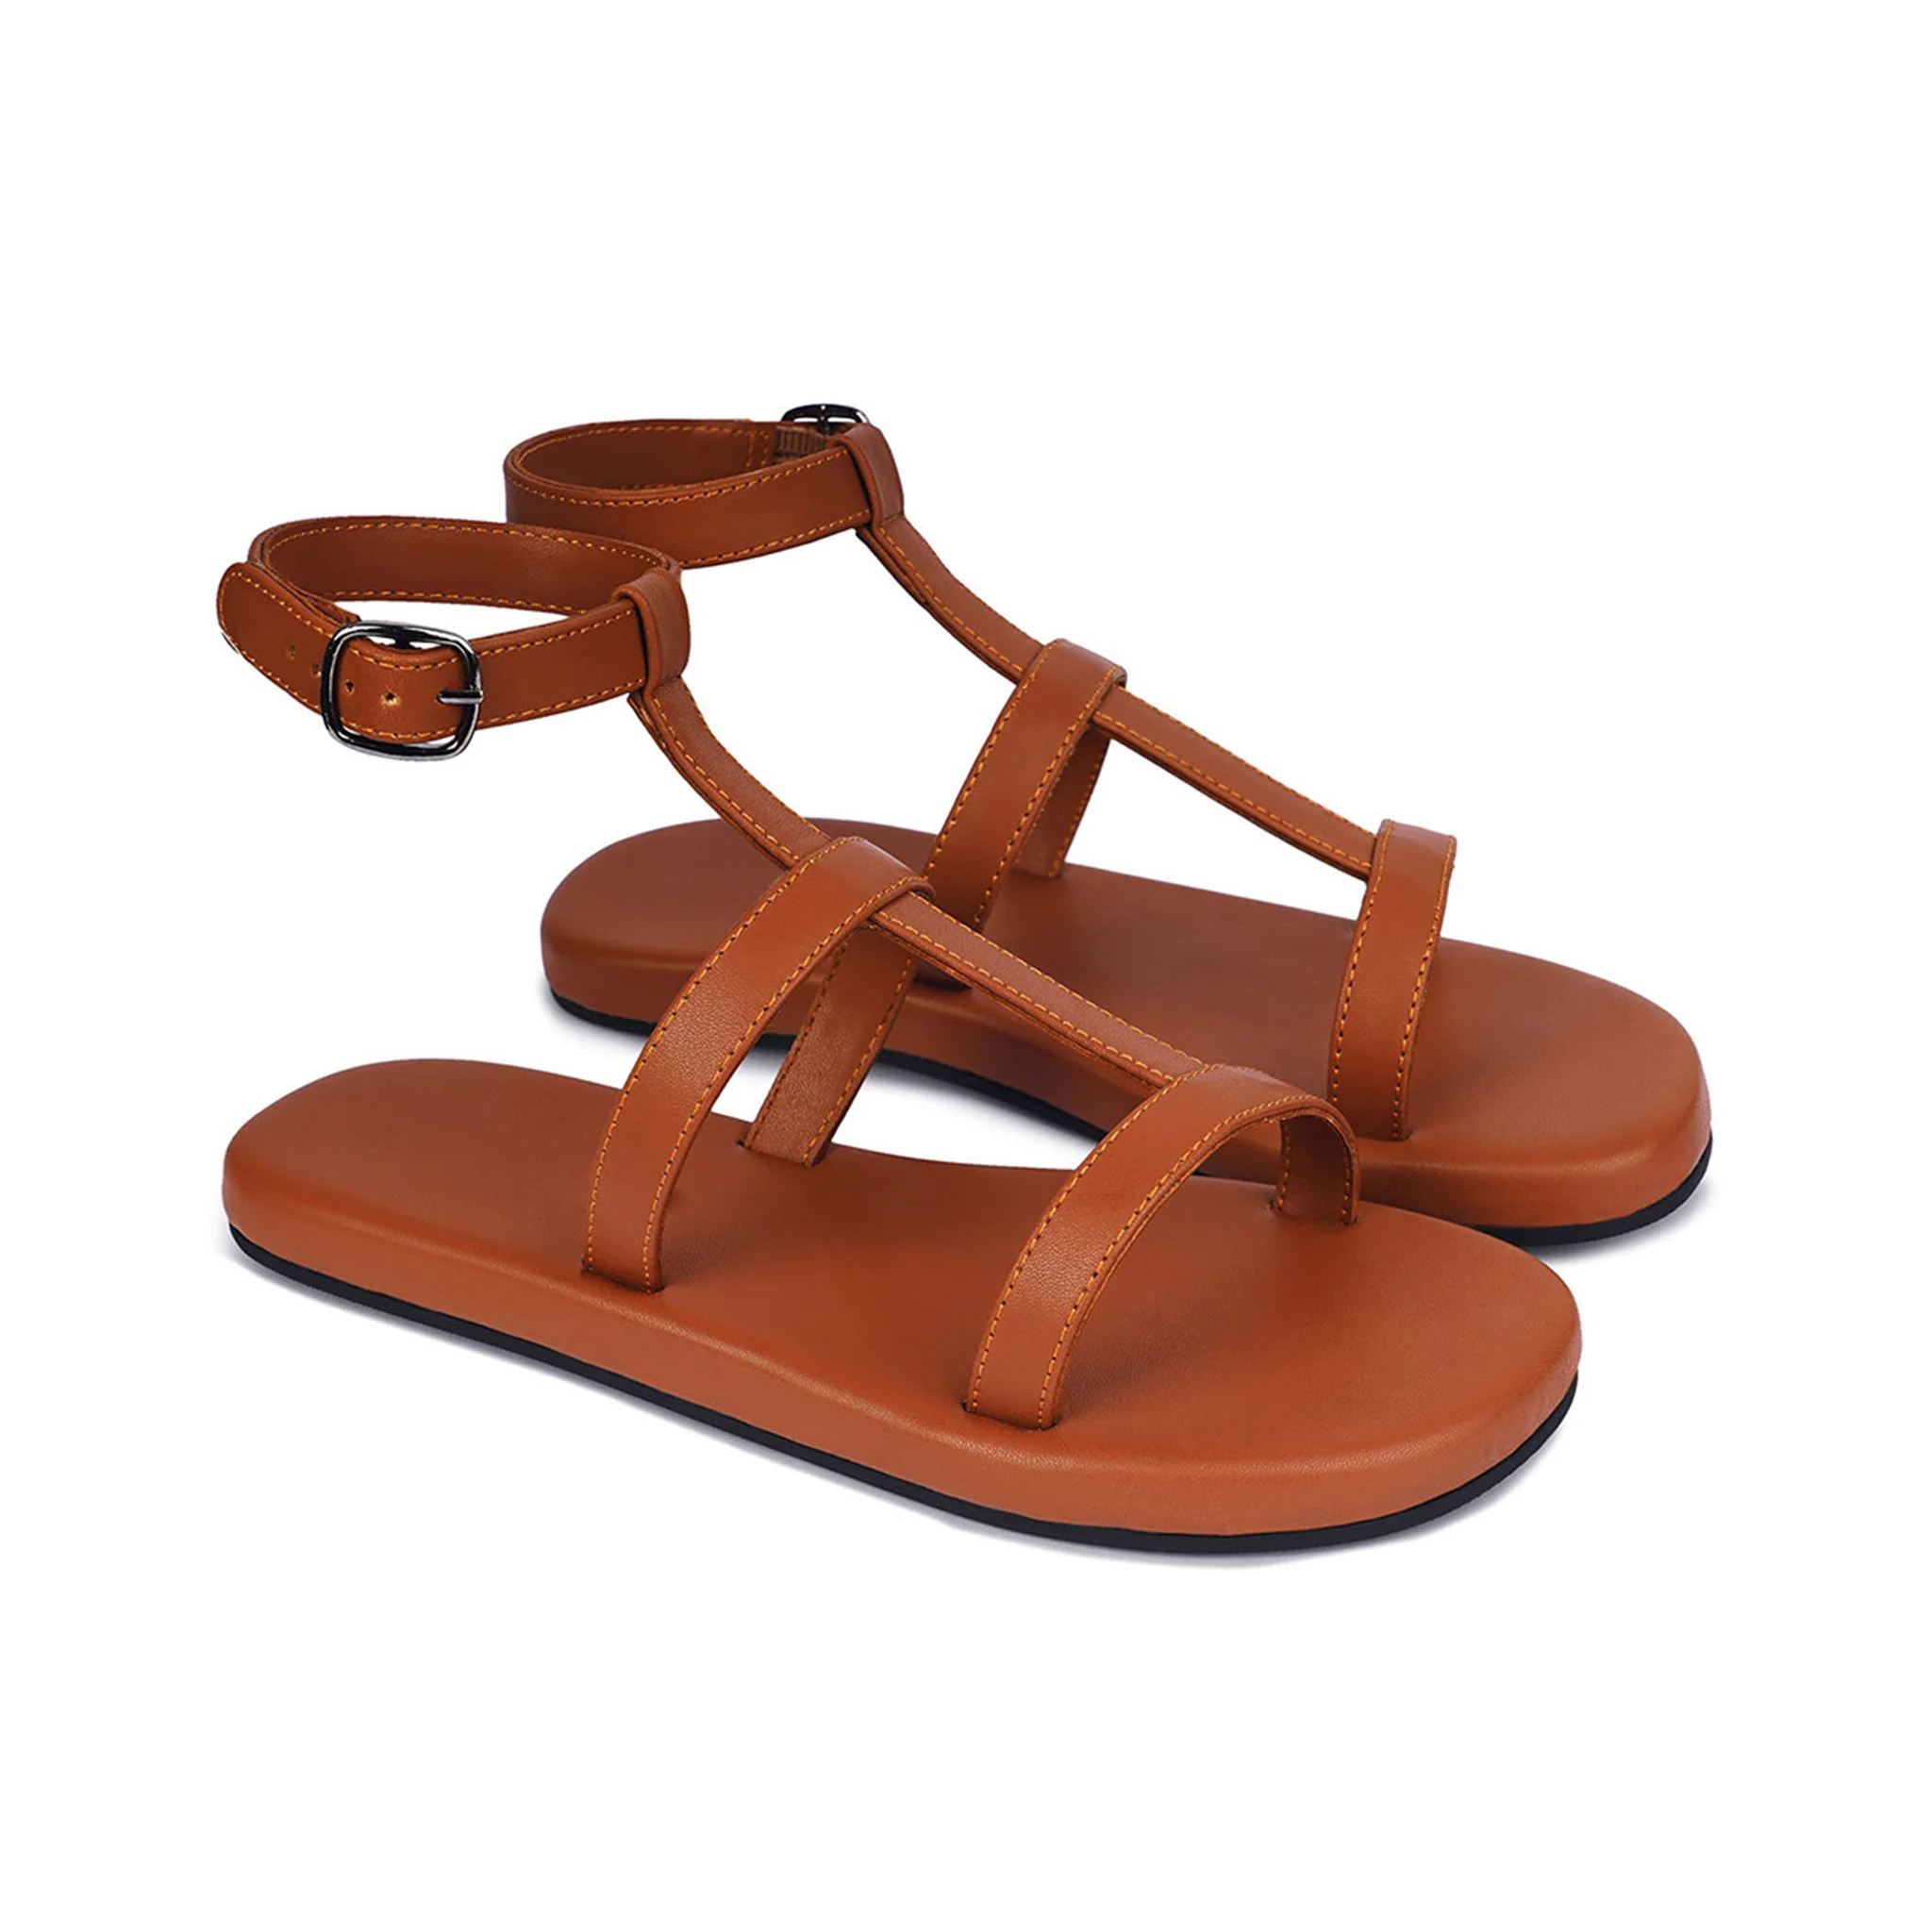 1 Saba T strap Vegan Leather Tan Sandals Women